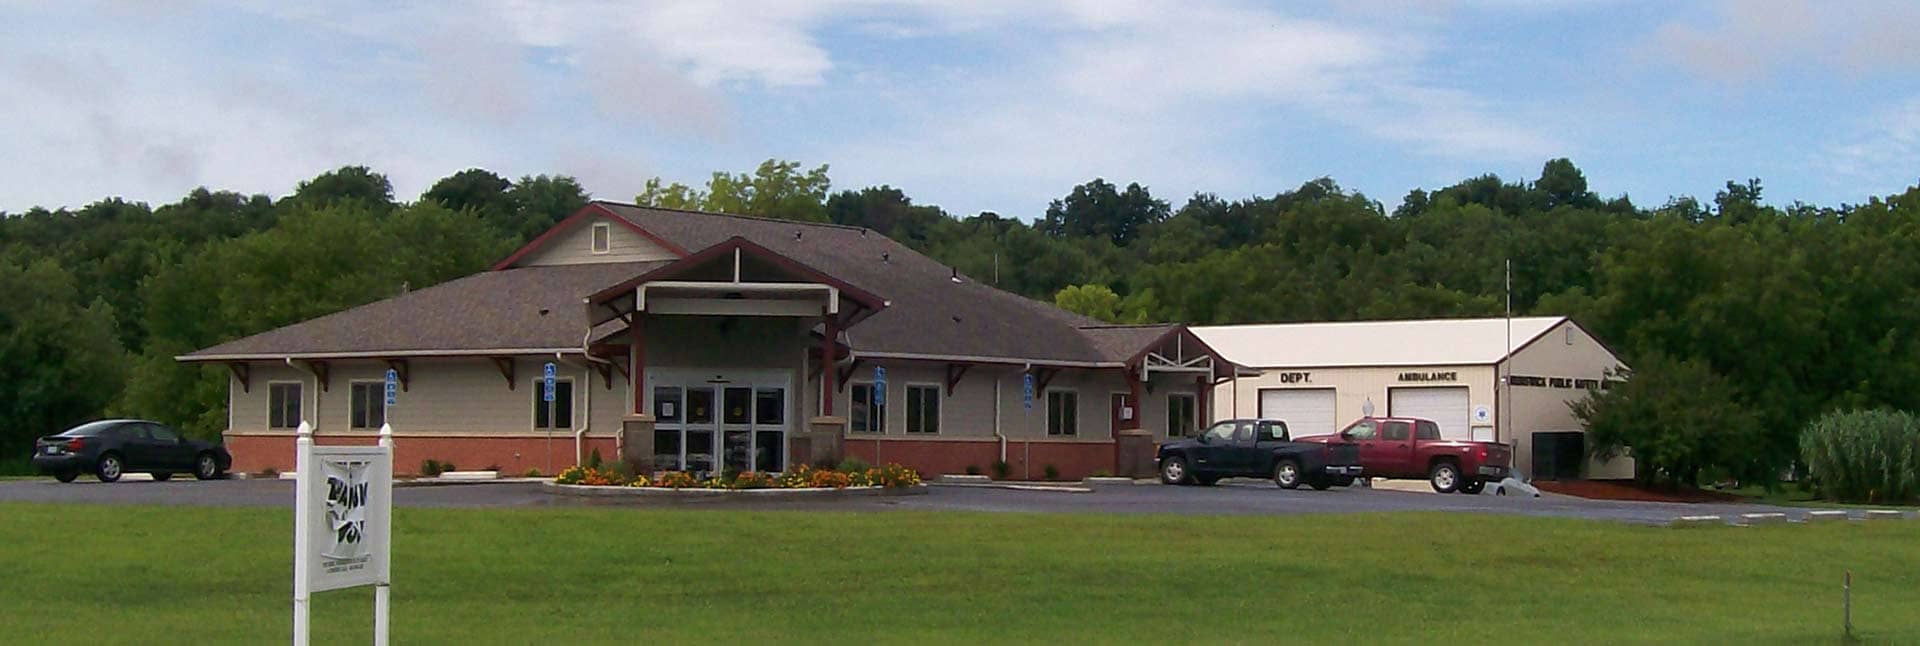 Grand River Medical Clinic, Brunswick, Missouri.